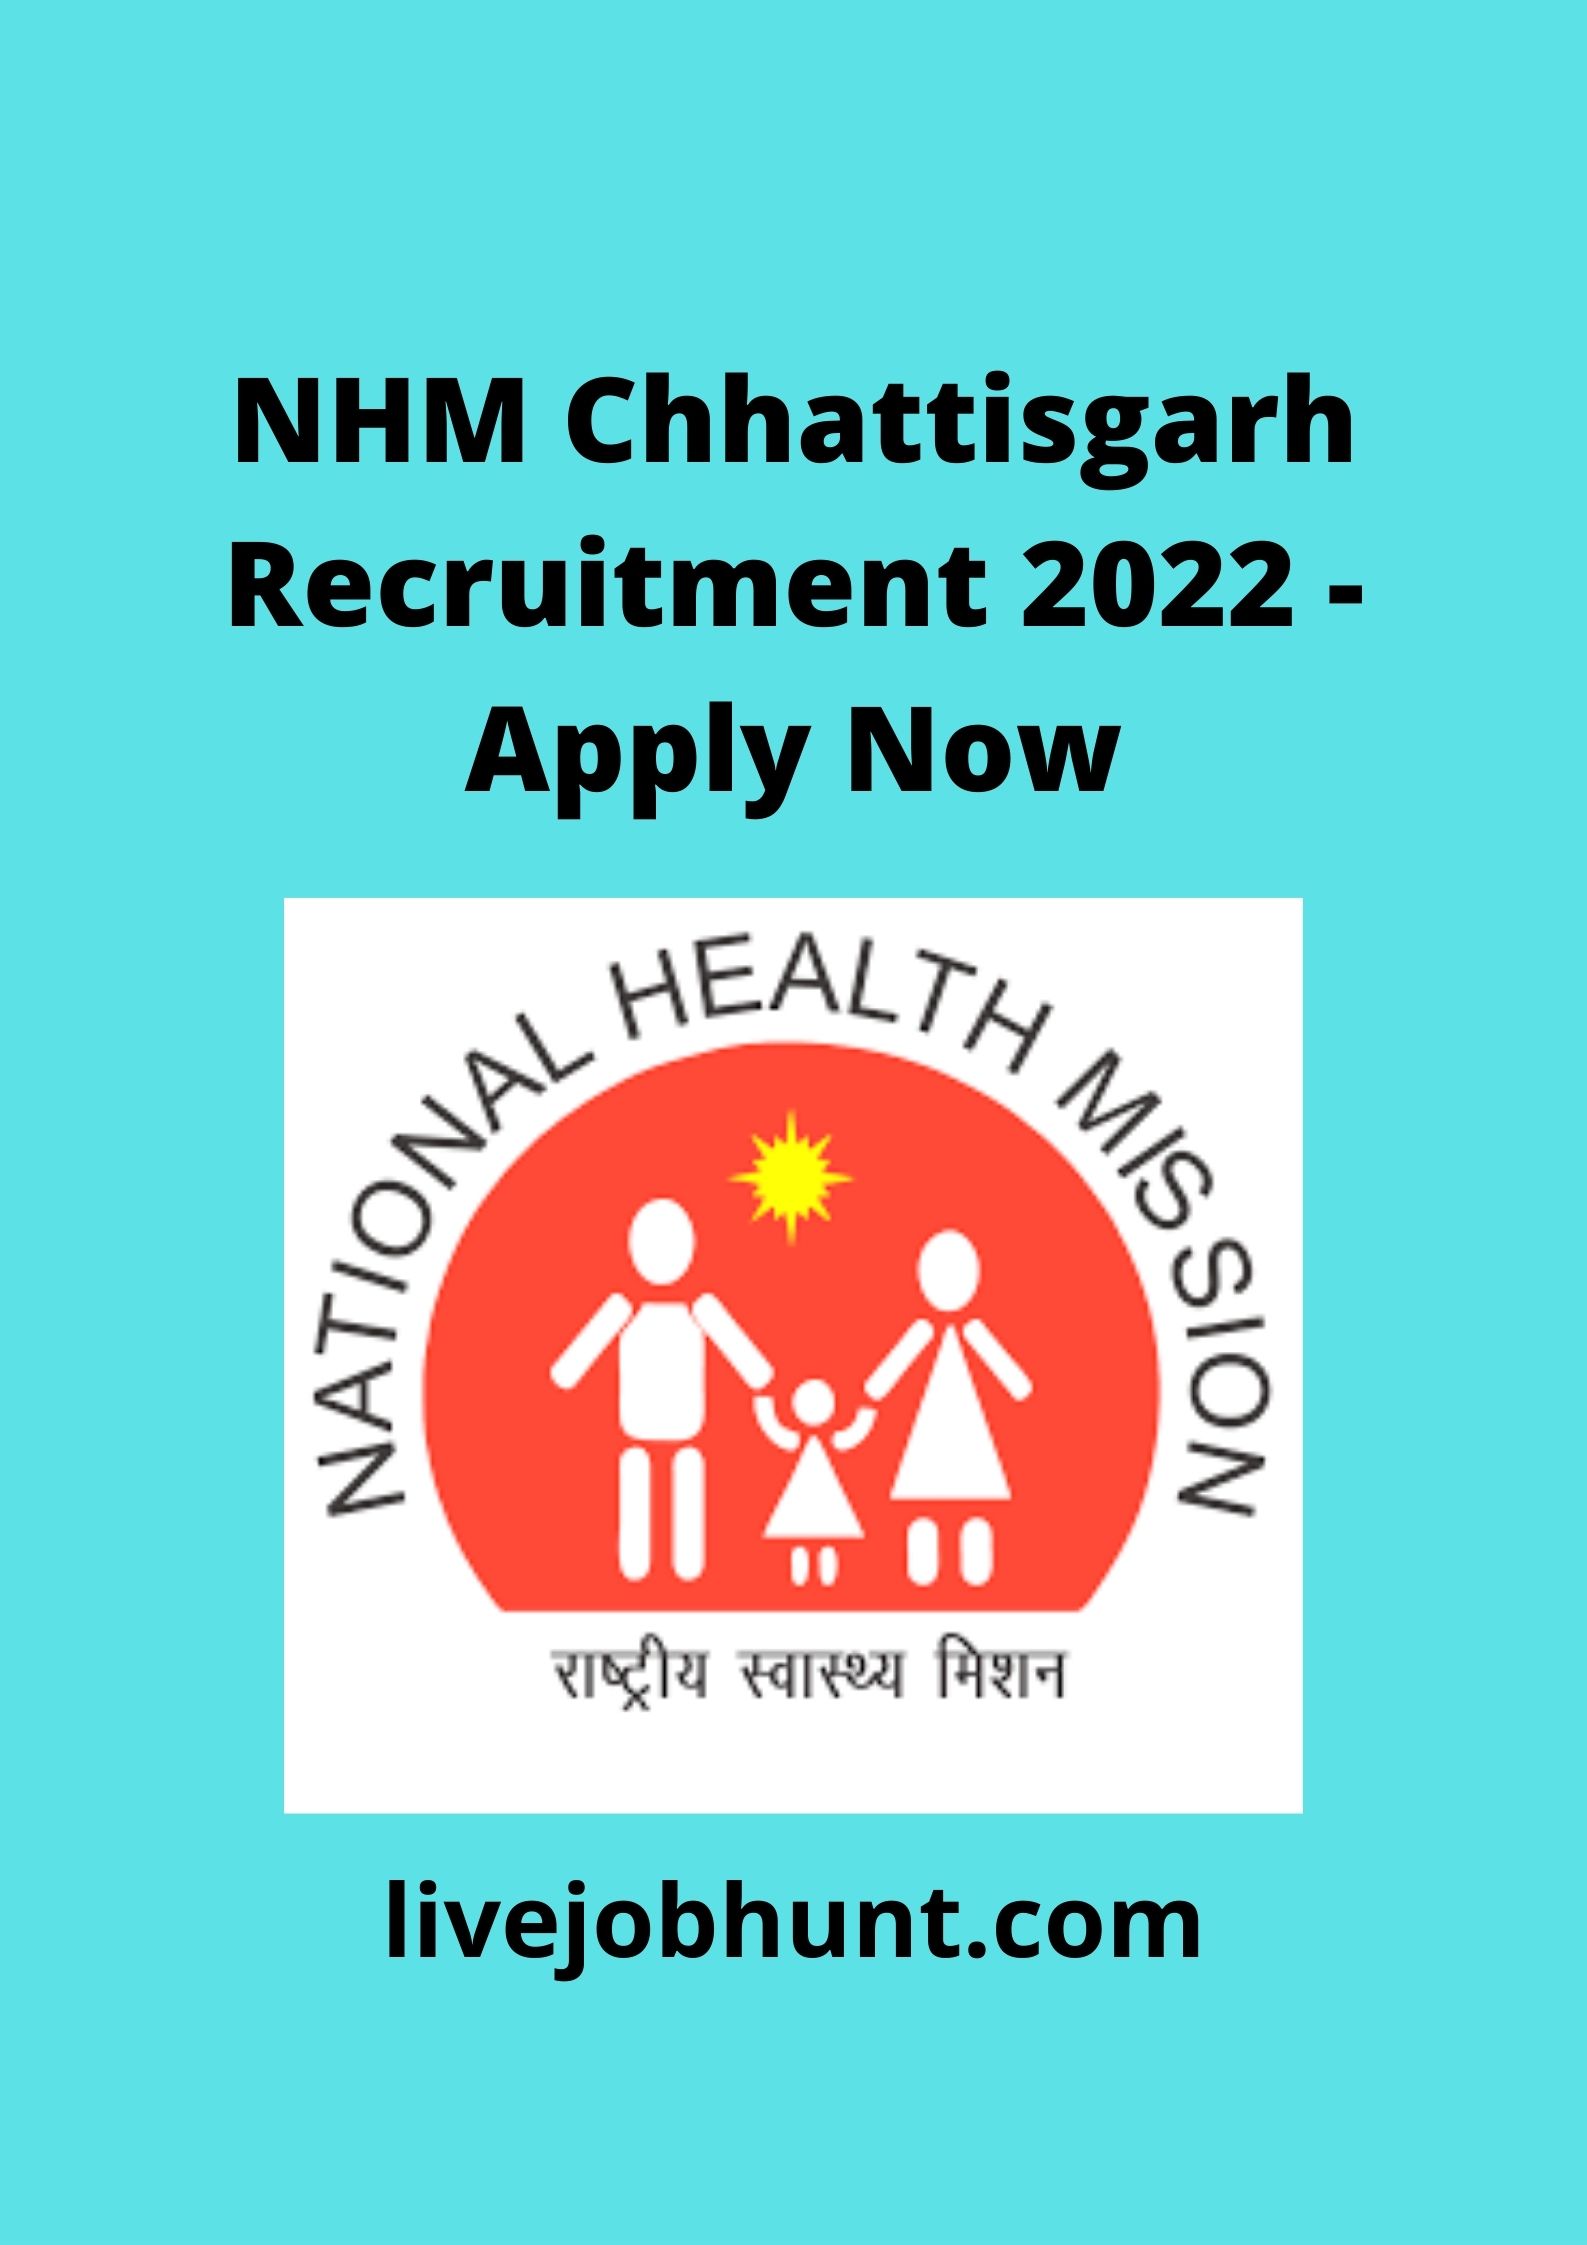 NHM Chhattisgarh Recruitment 2022 - Apply Now